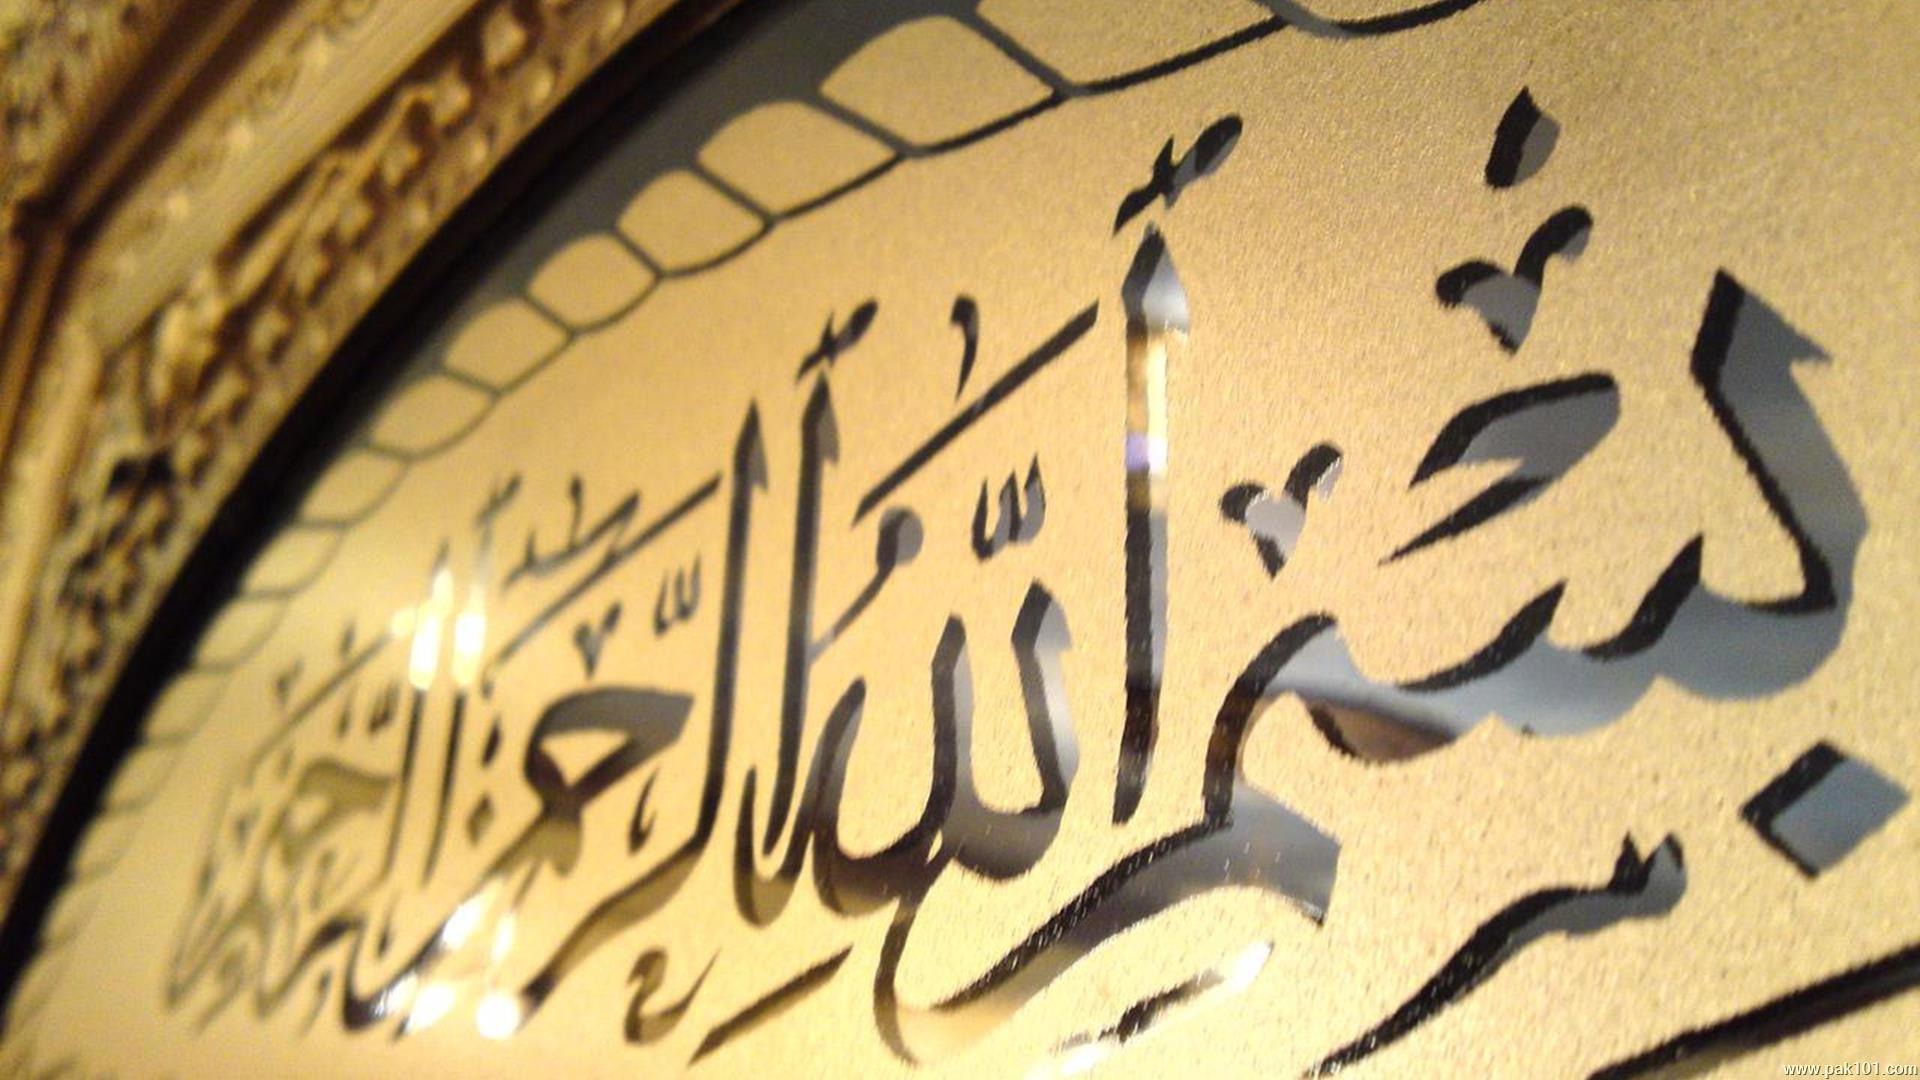 Wallpaper > Islamic > Beautiful Name Allah high quality! Free